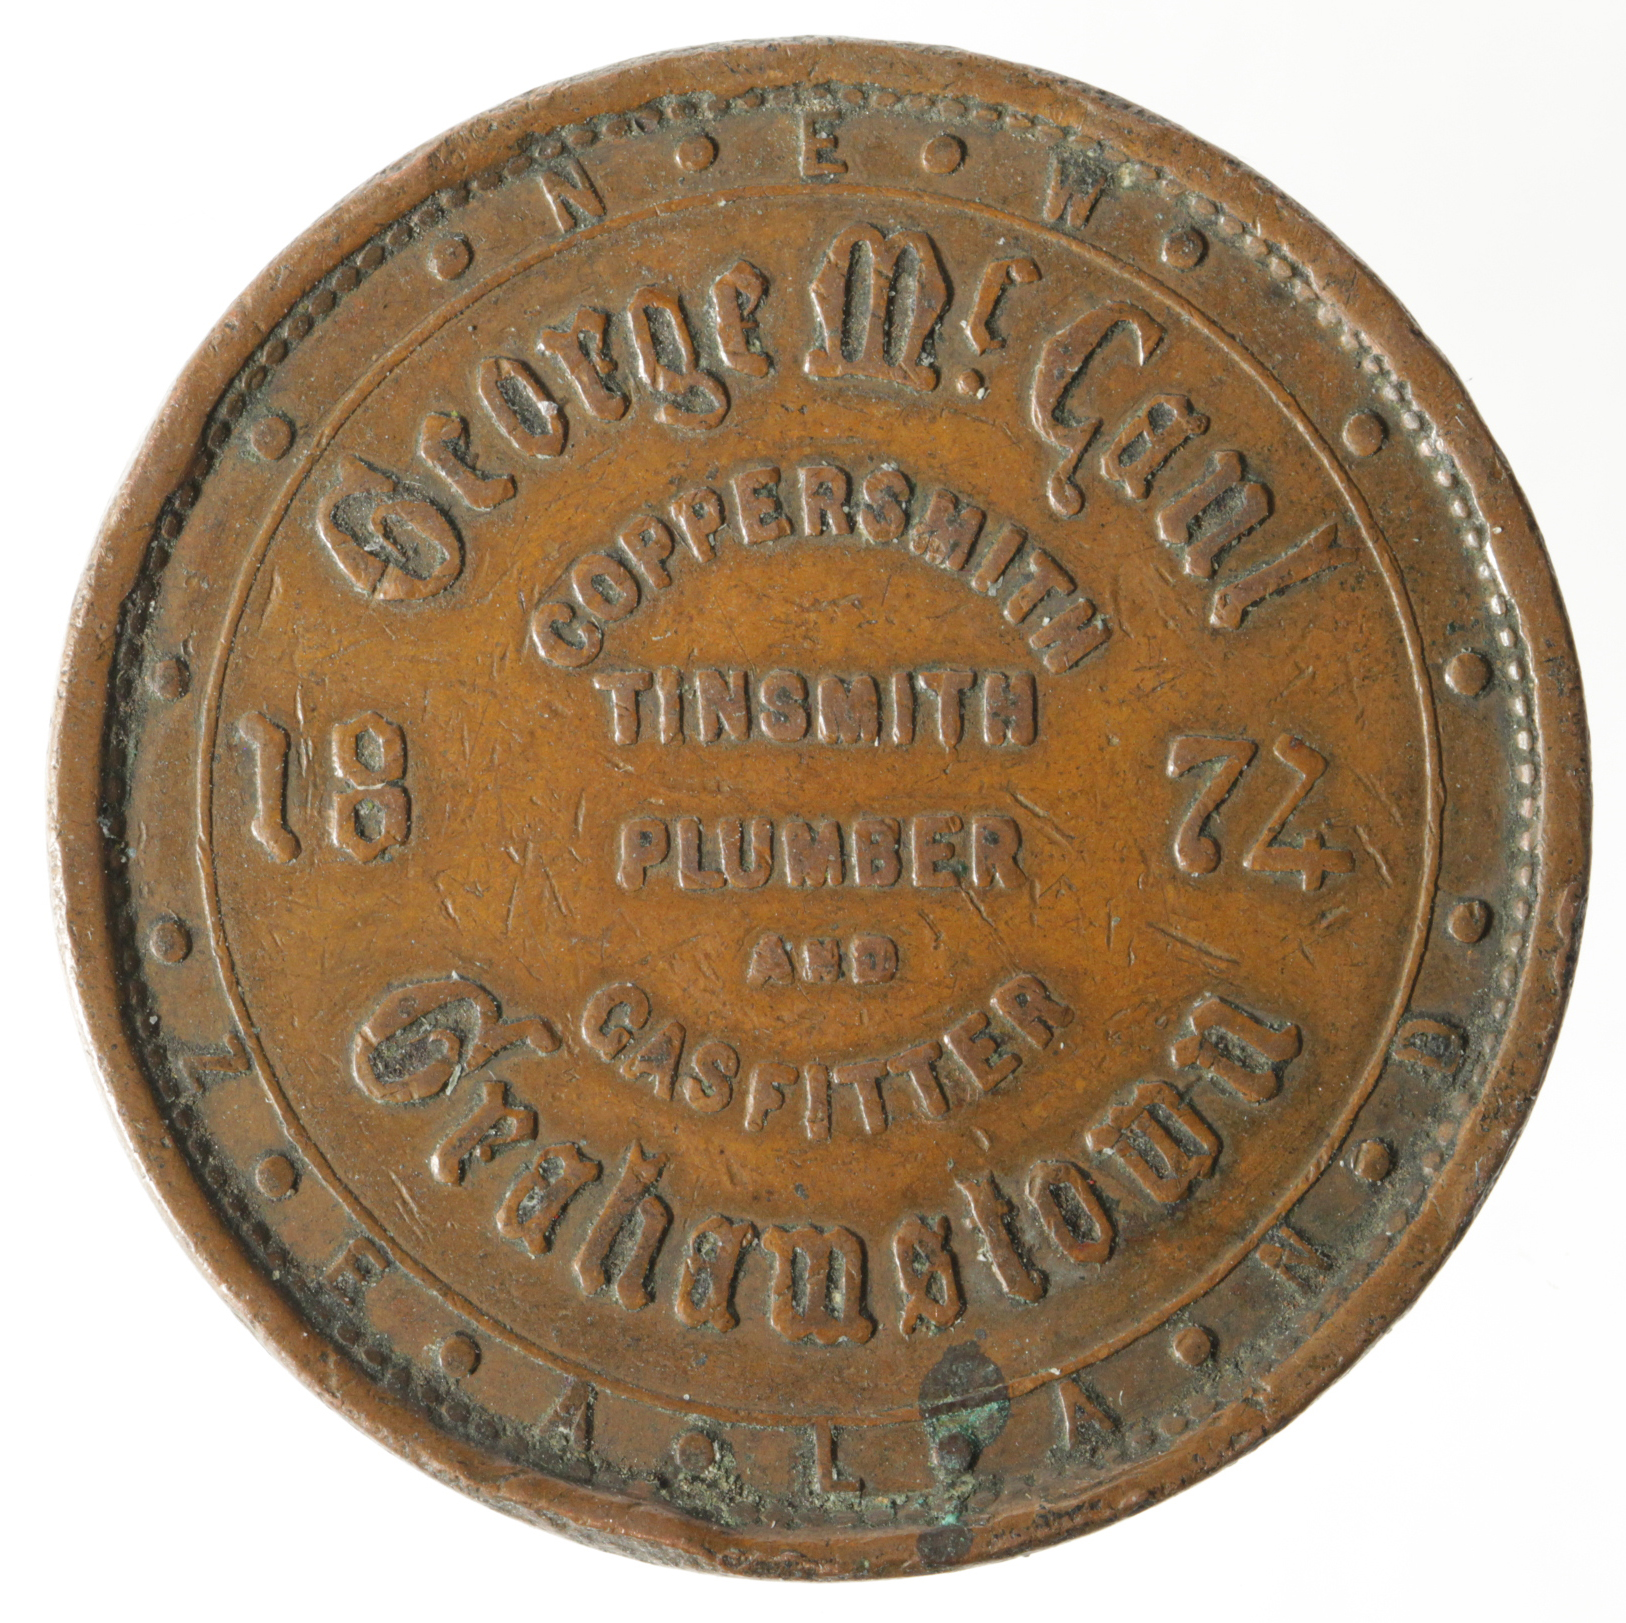 New Zealand, George McCaul, Grahamstown Penny Token 1874, GF/nVF, edge knock. - Image 2 of 2